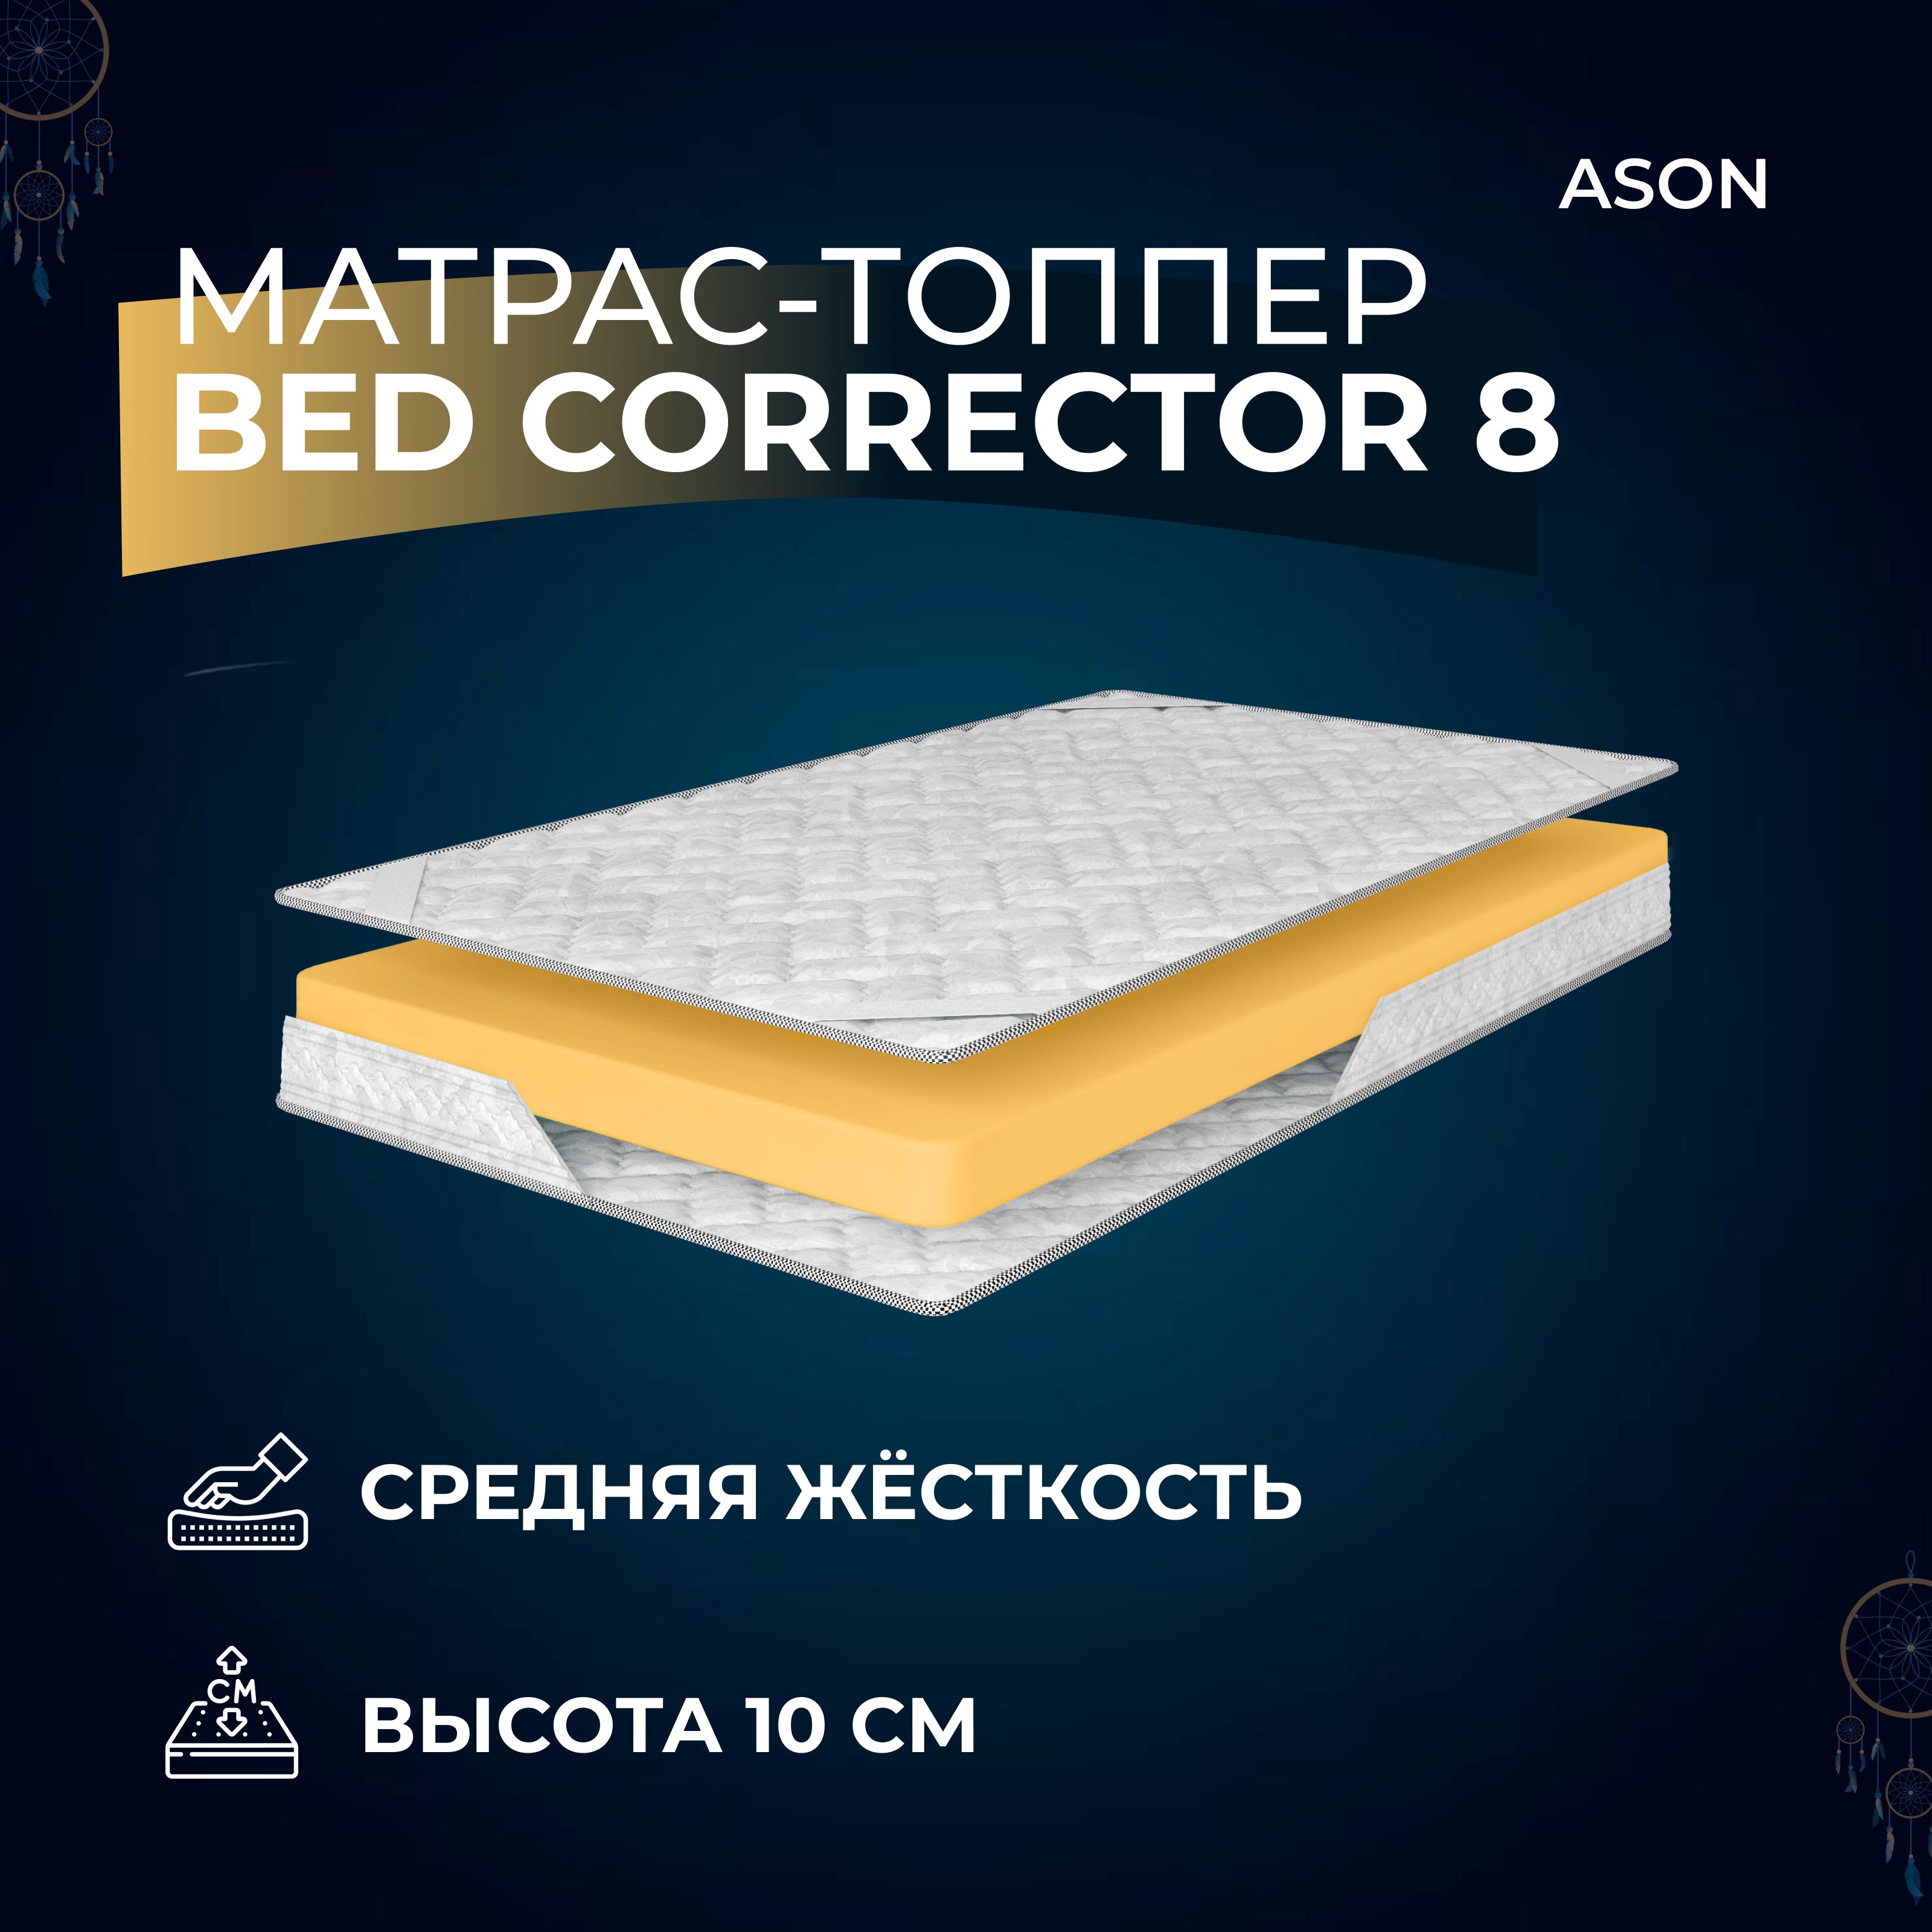 Матрас-топпер 60х140 Ason, Bed corrector 8